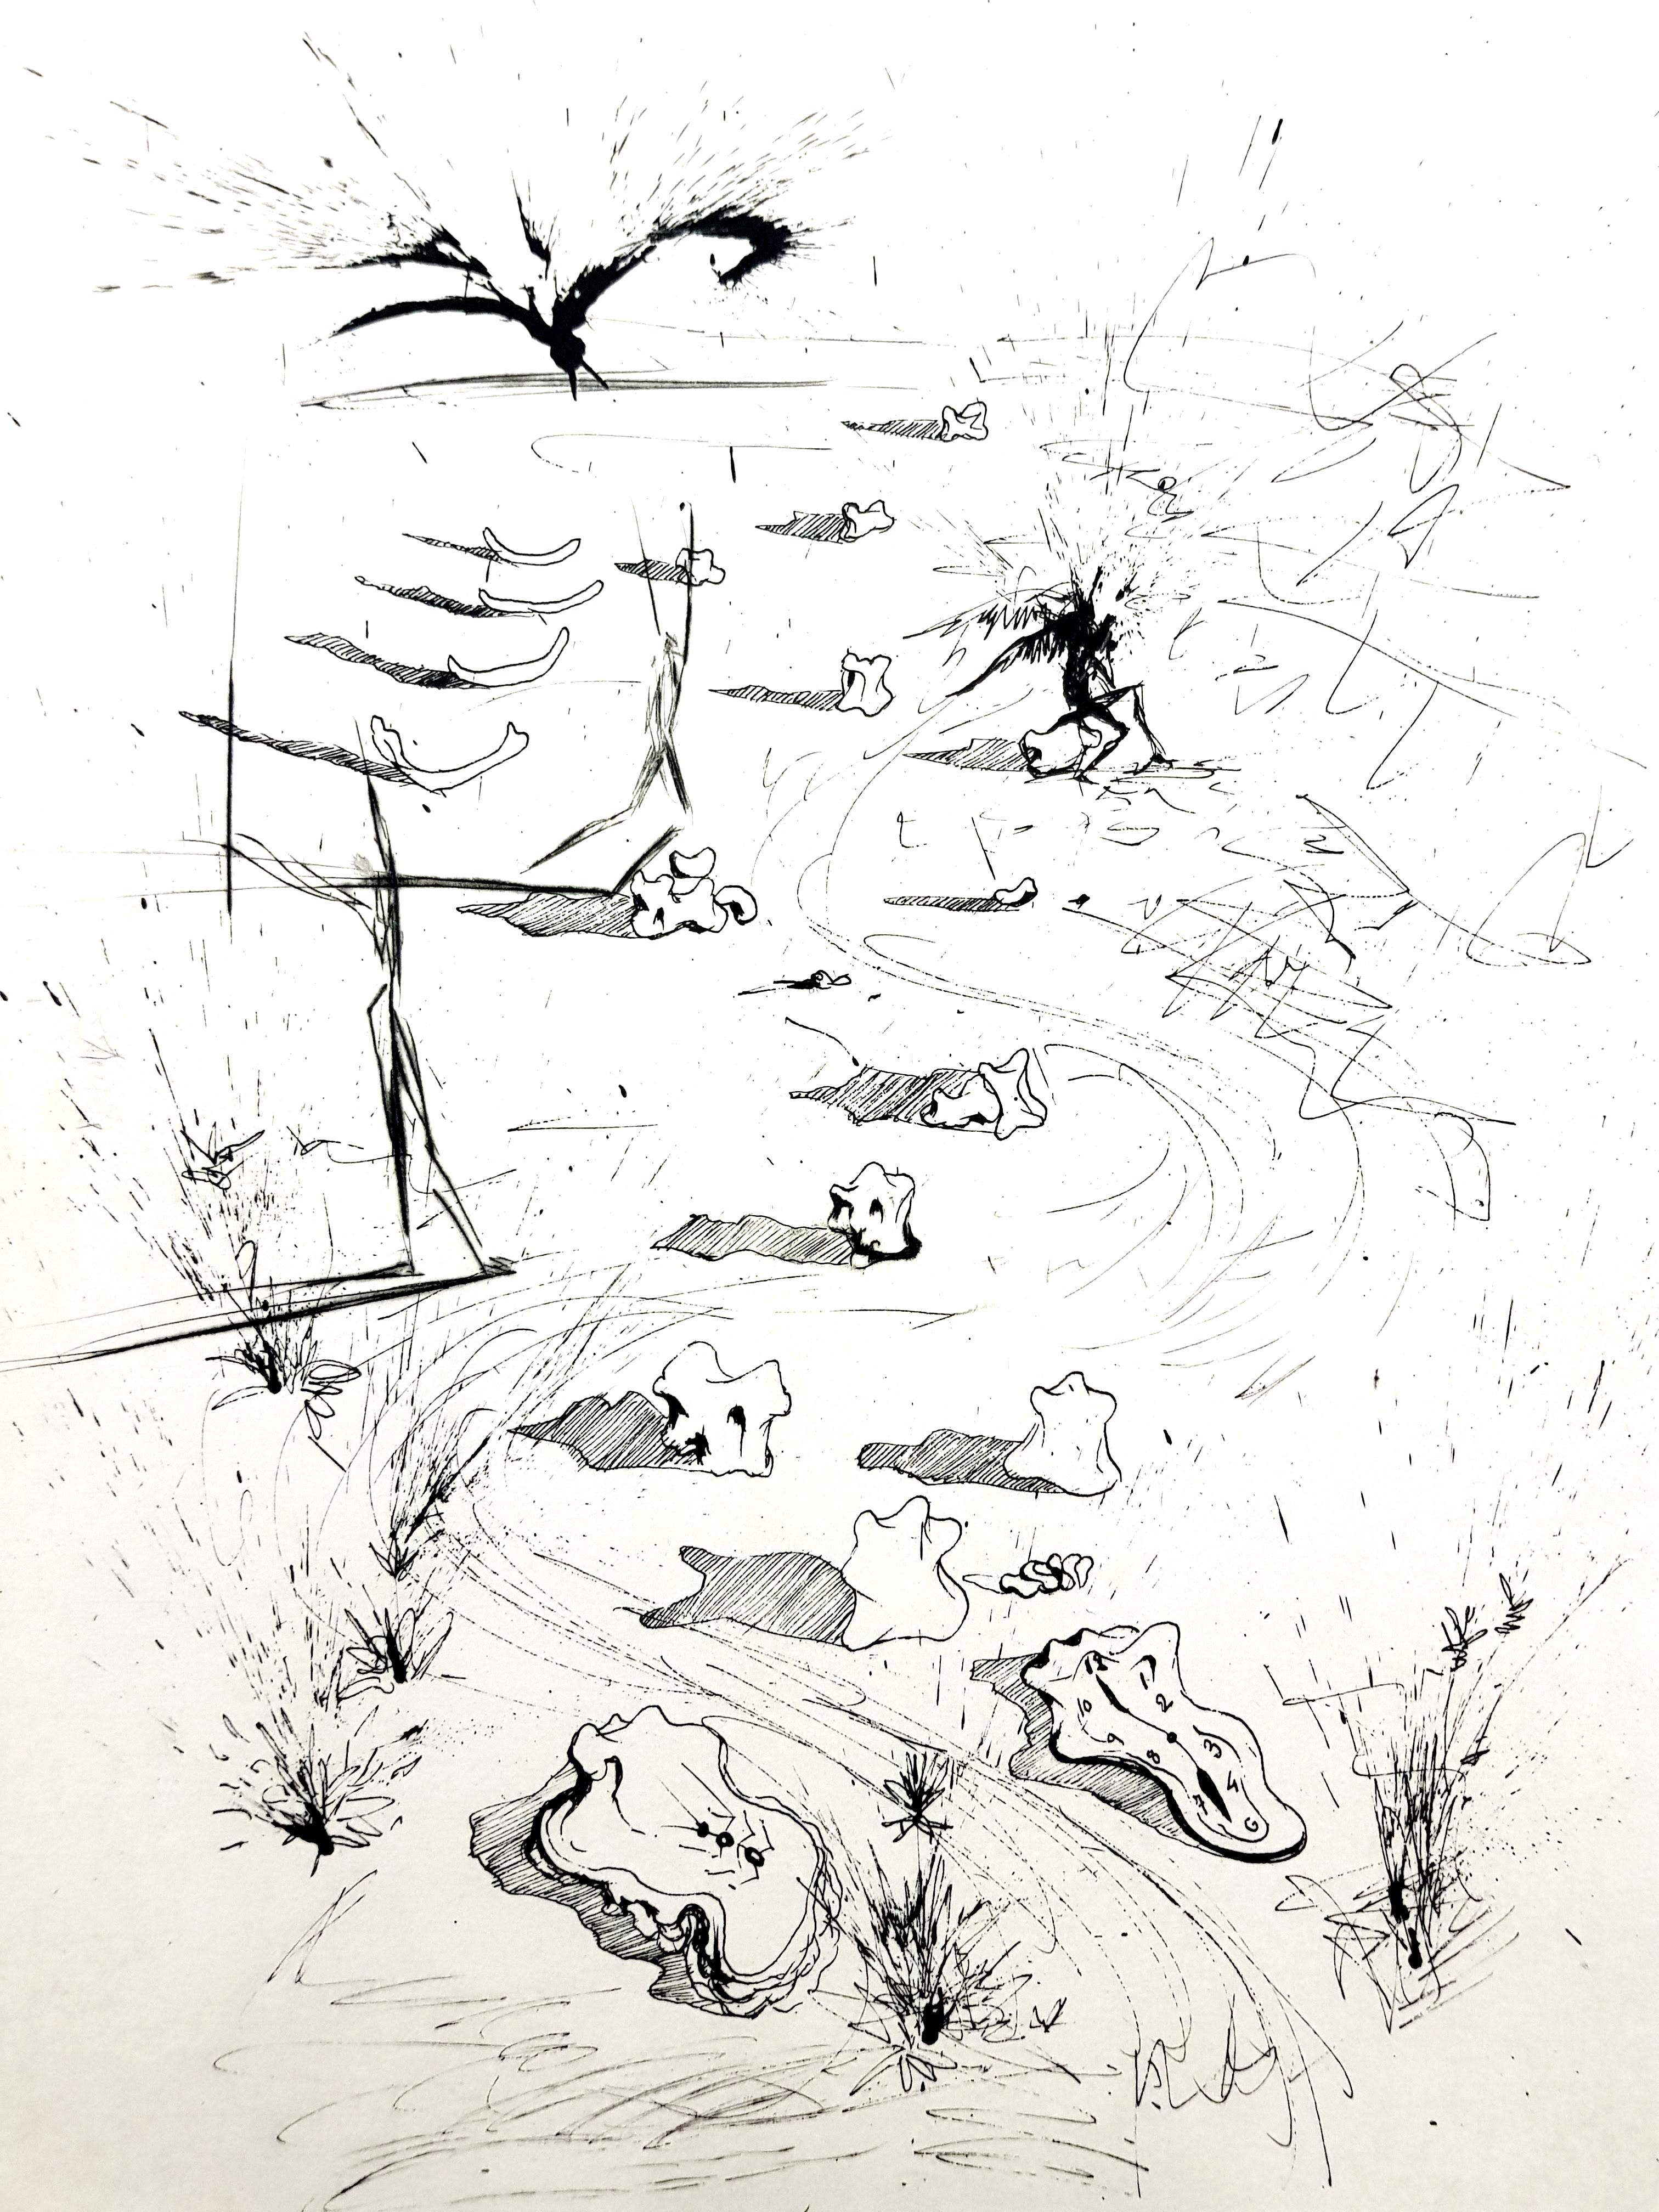 Salvador Dali - The Trenches - Original Etching - Print by Salvador Dalí